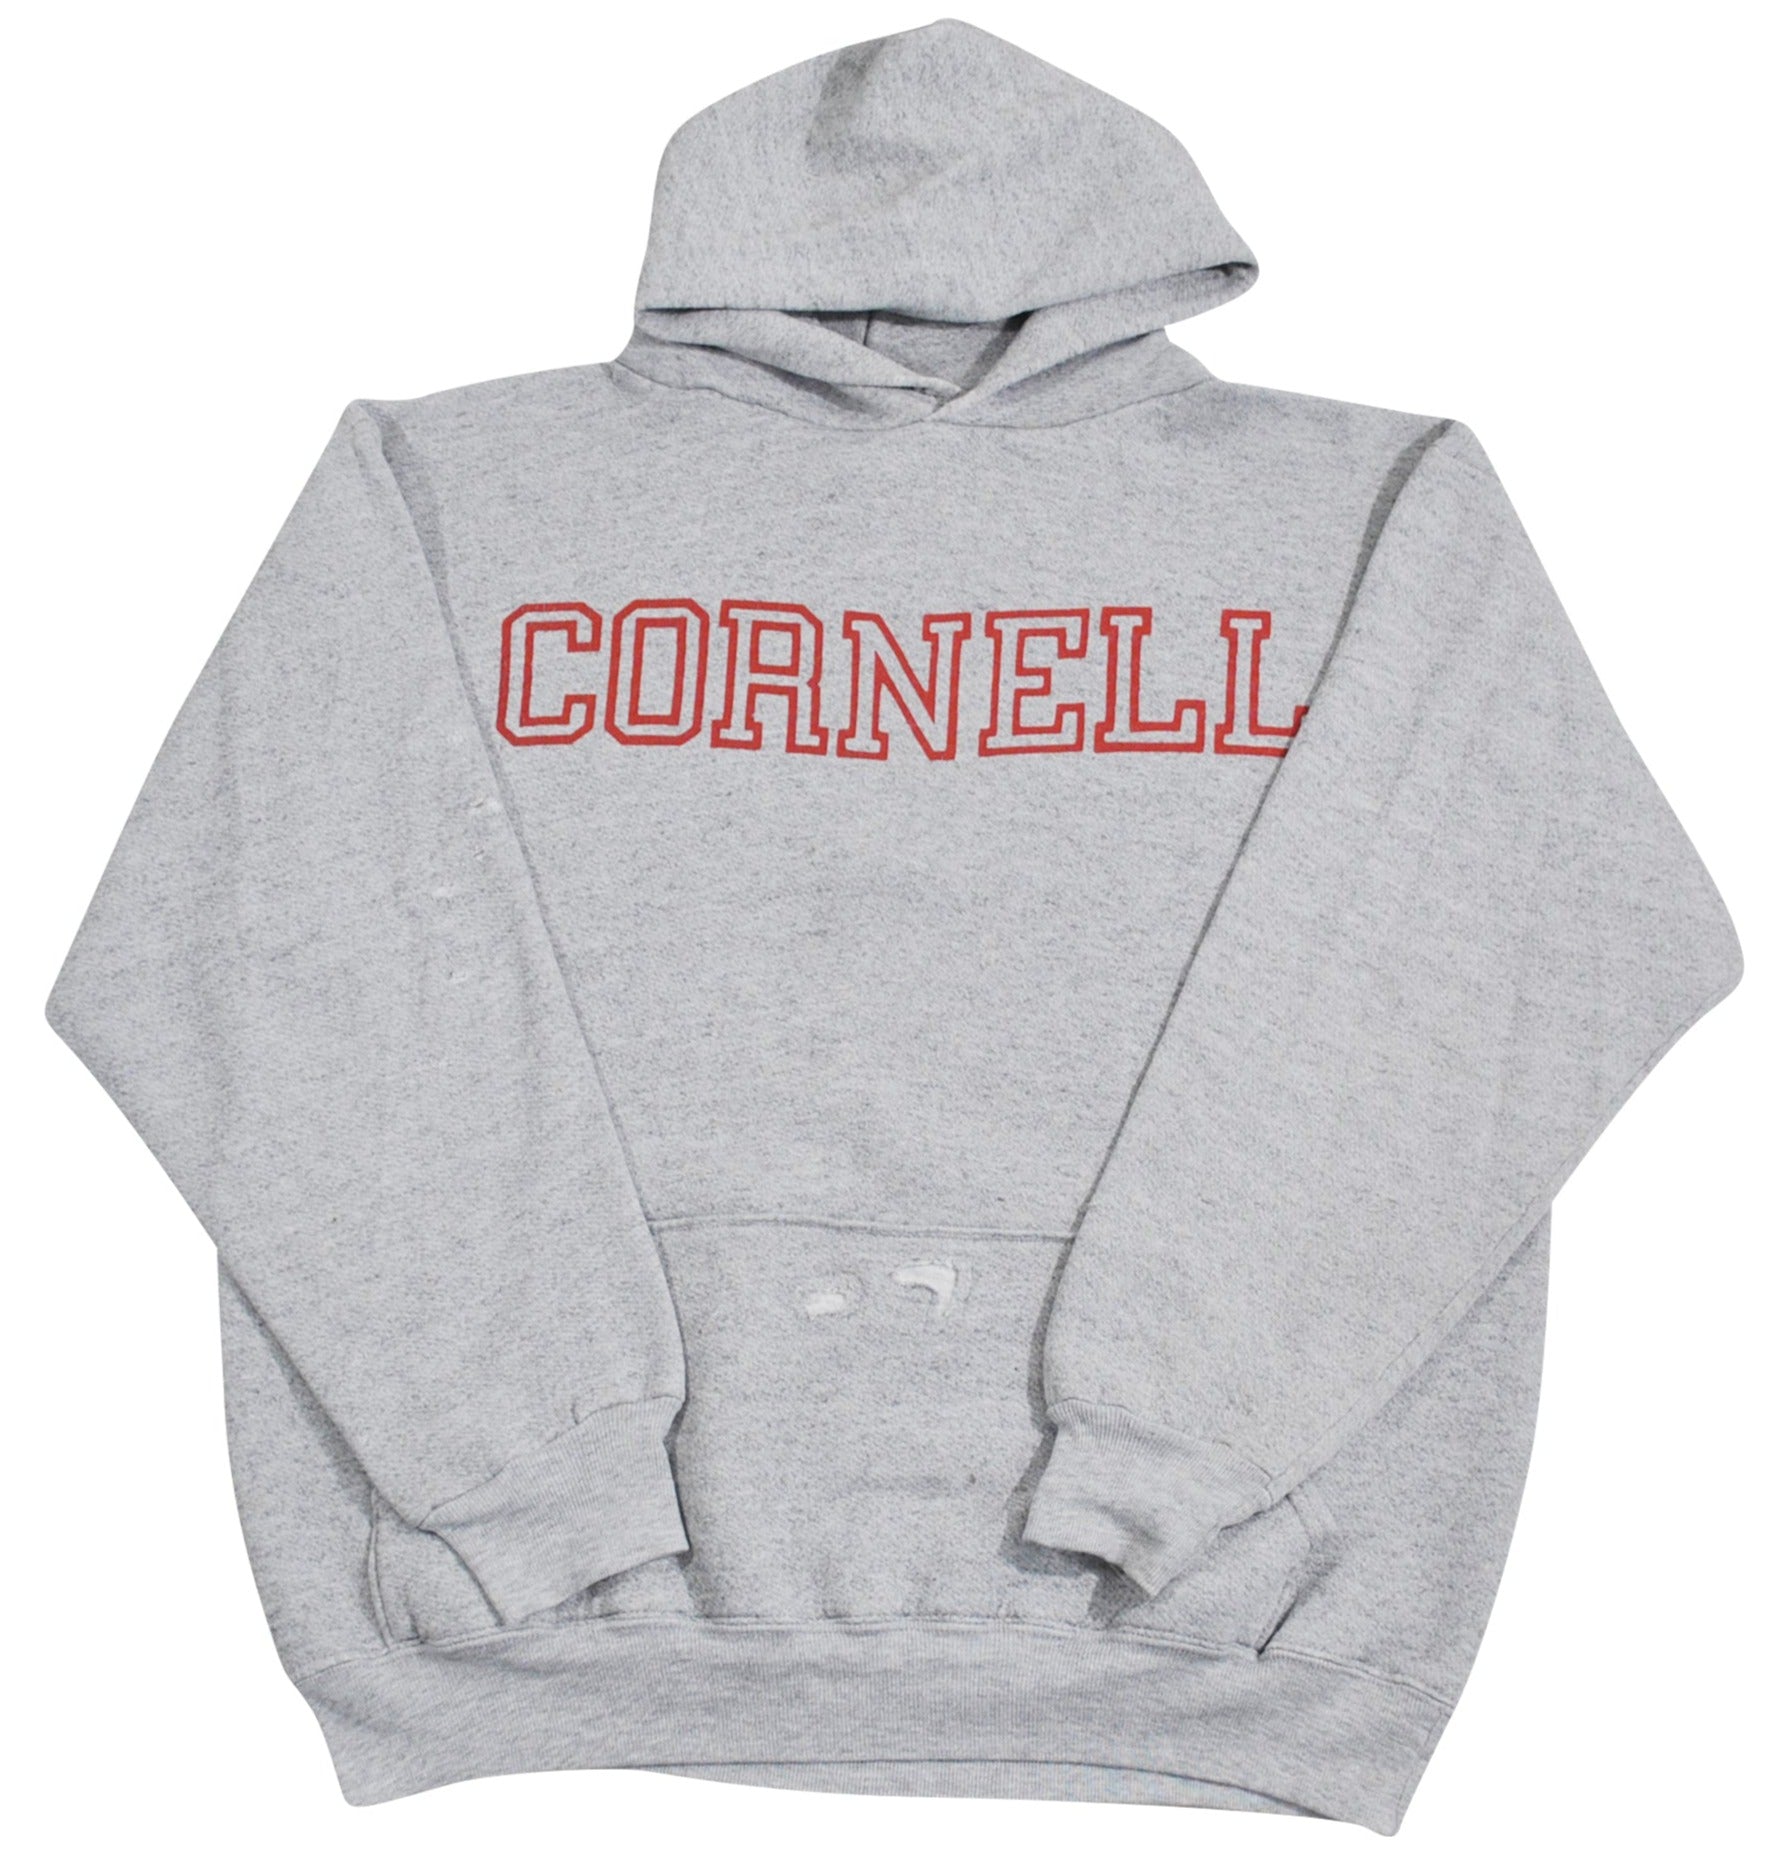 Cornell University Crewneck Sweatshirt, Red